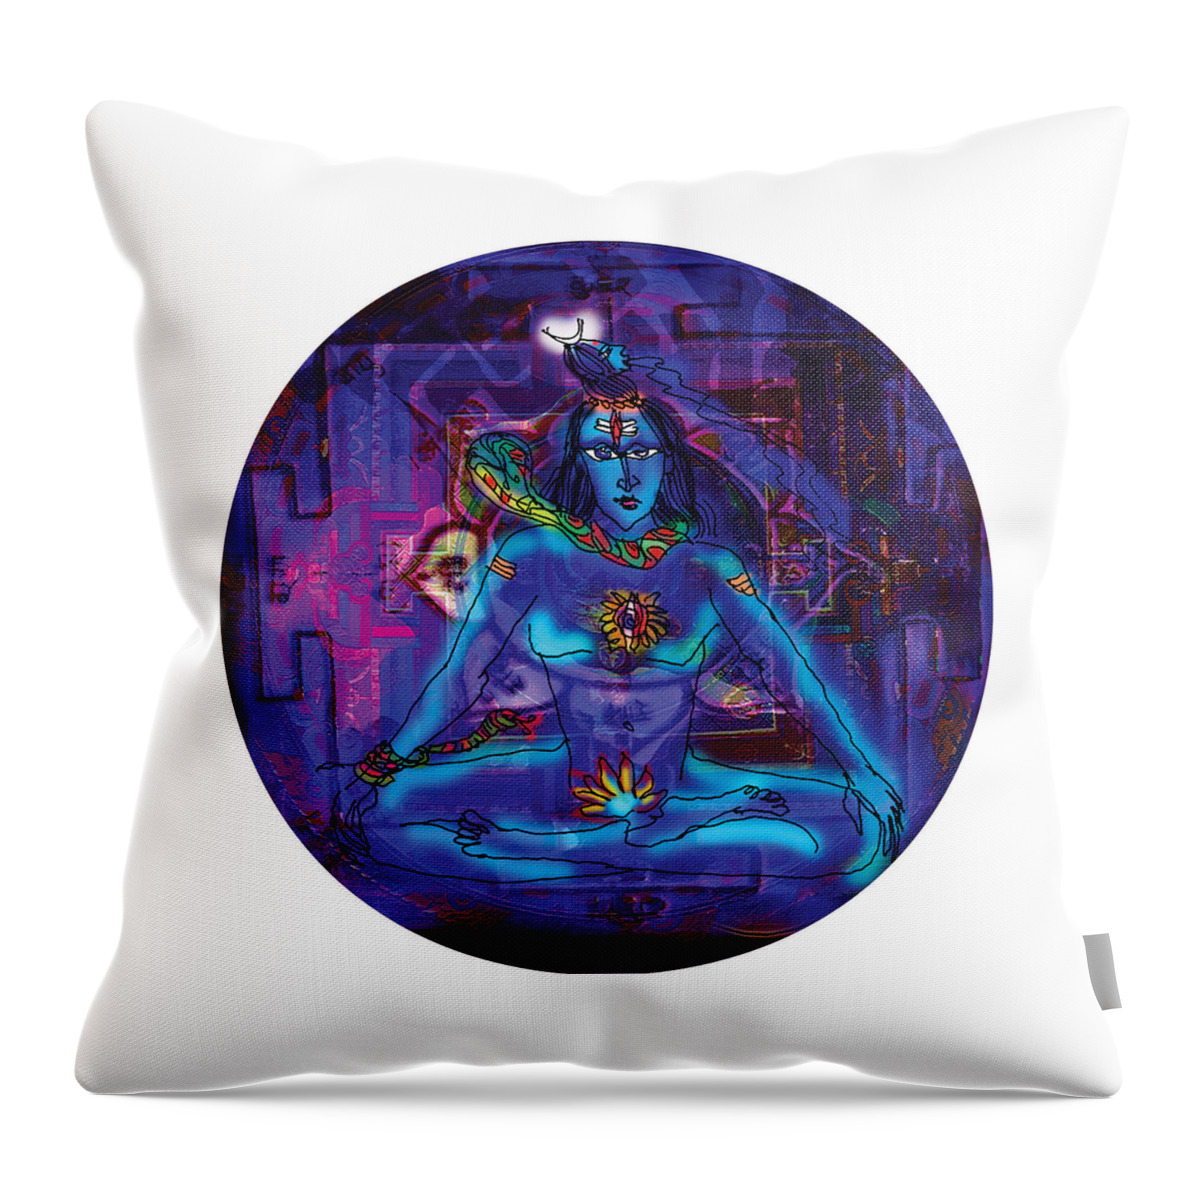 Himalaya Throw Pillow featuring the painting Shiva in meditation by Guruji Aruneshvar Paris Art Curator Katrin